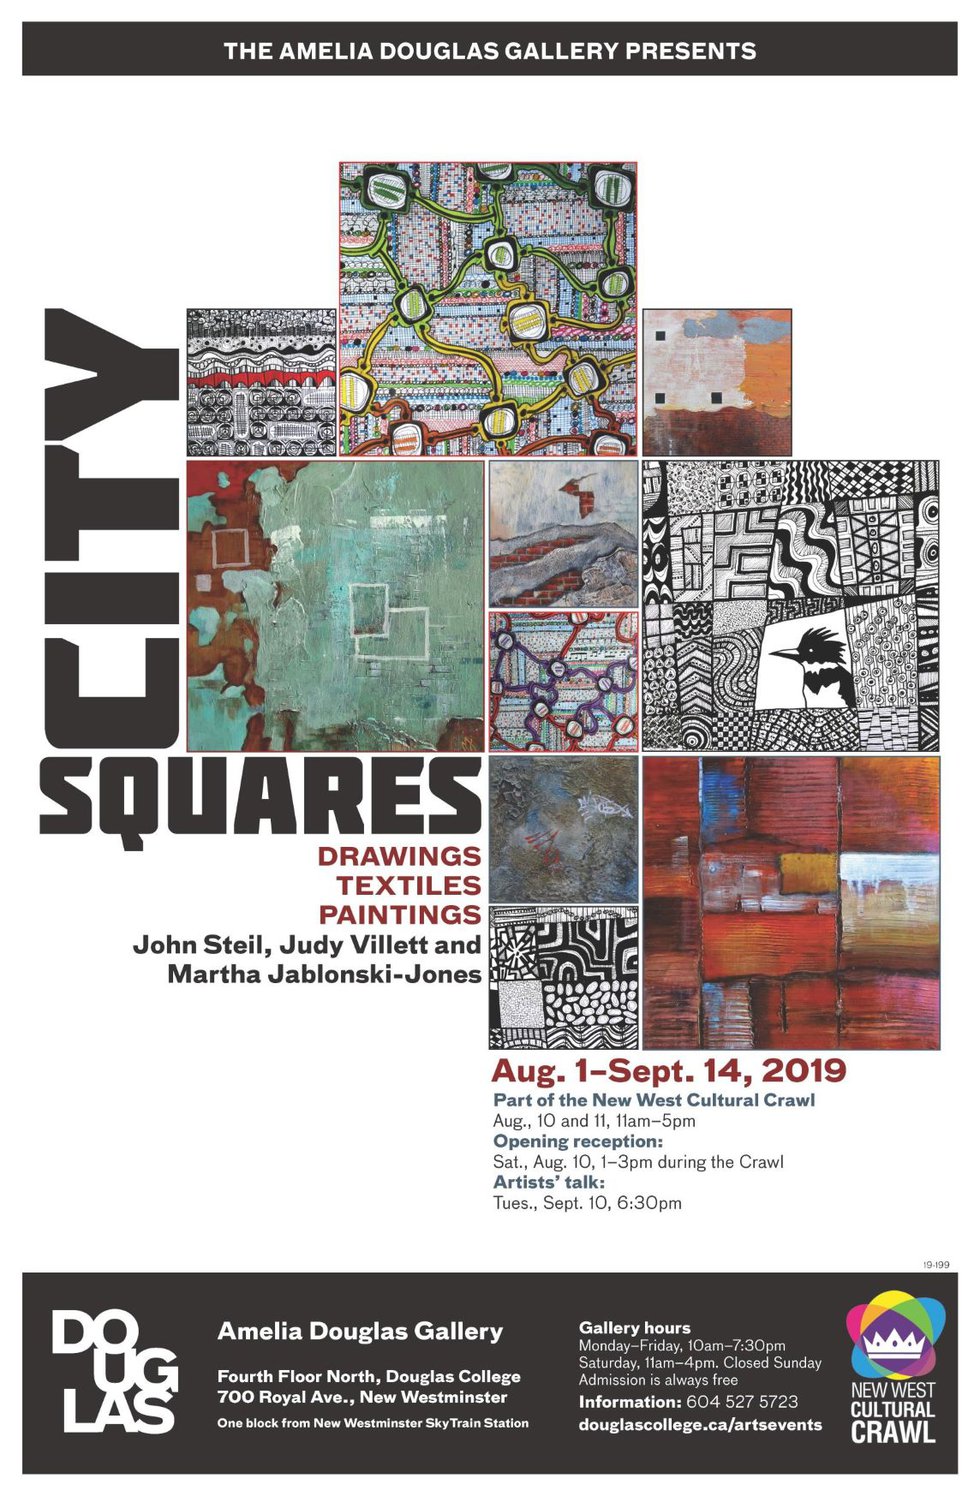 John Steil, Judy Villett and Martha Jablonski-Jones, "City Squares," 2019